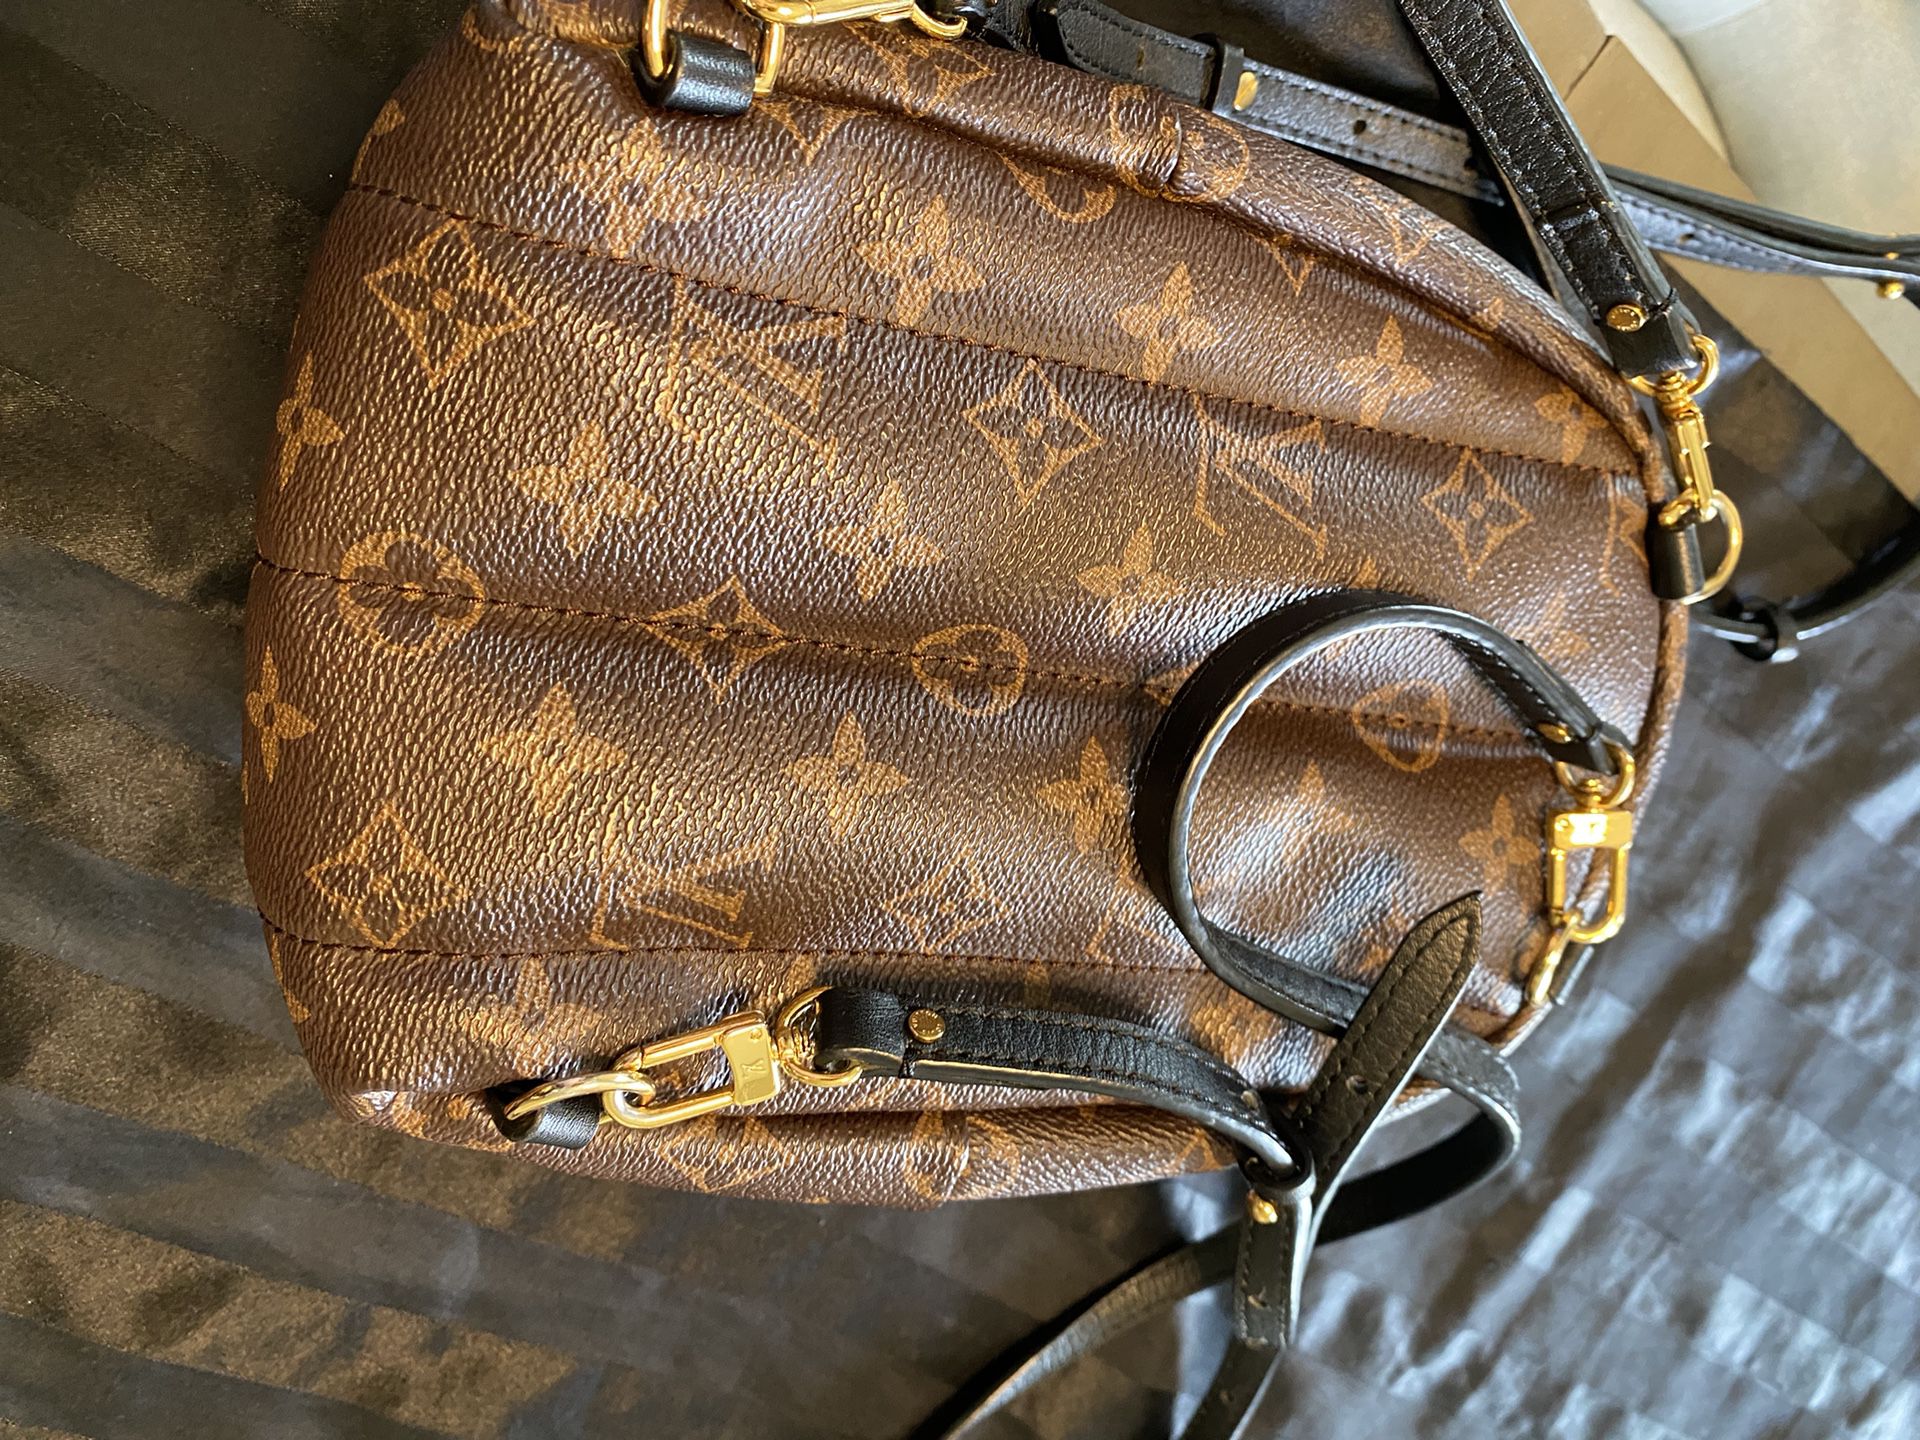 Louis Vuitton Medium Handbag for Sale in Frisco, TX - OfferUp